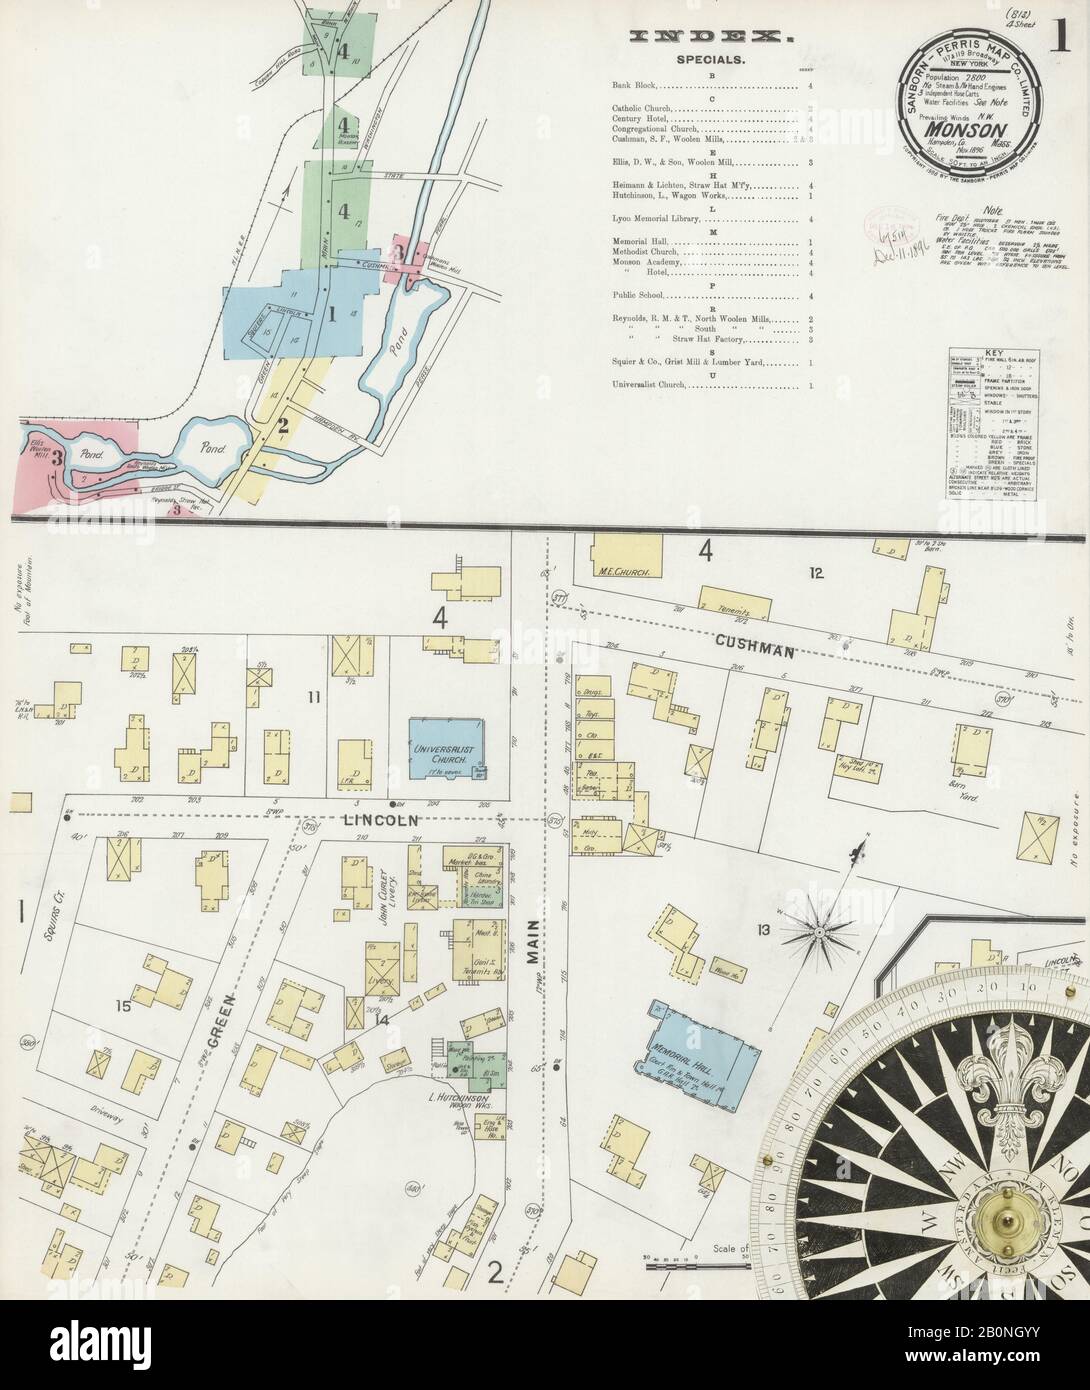 Bild 1 von Sanborn Fire Insurance Map aus Monson, Hampden County, Massachusetts. Nov. 4 Blatt(e), Amerika, Straßenkarte mit einem Kompass Aus Dem 19. Jahrhundert Stockfoto